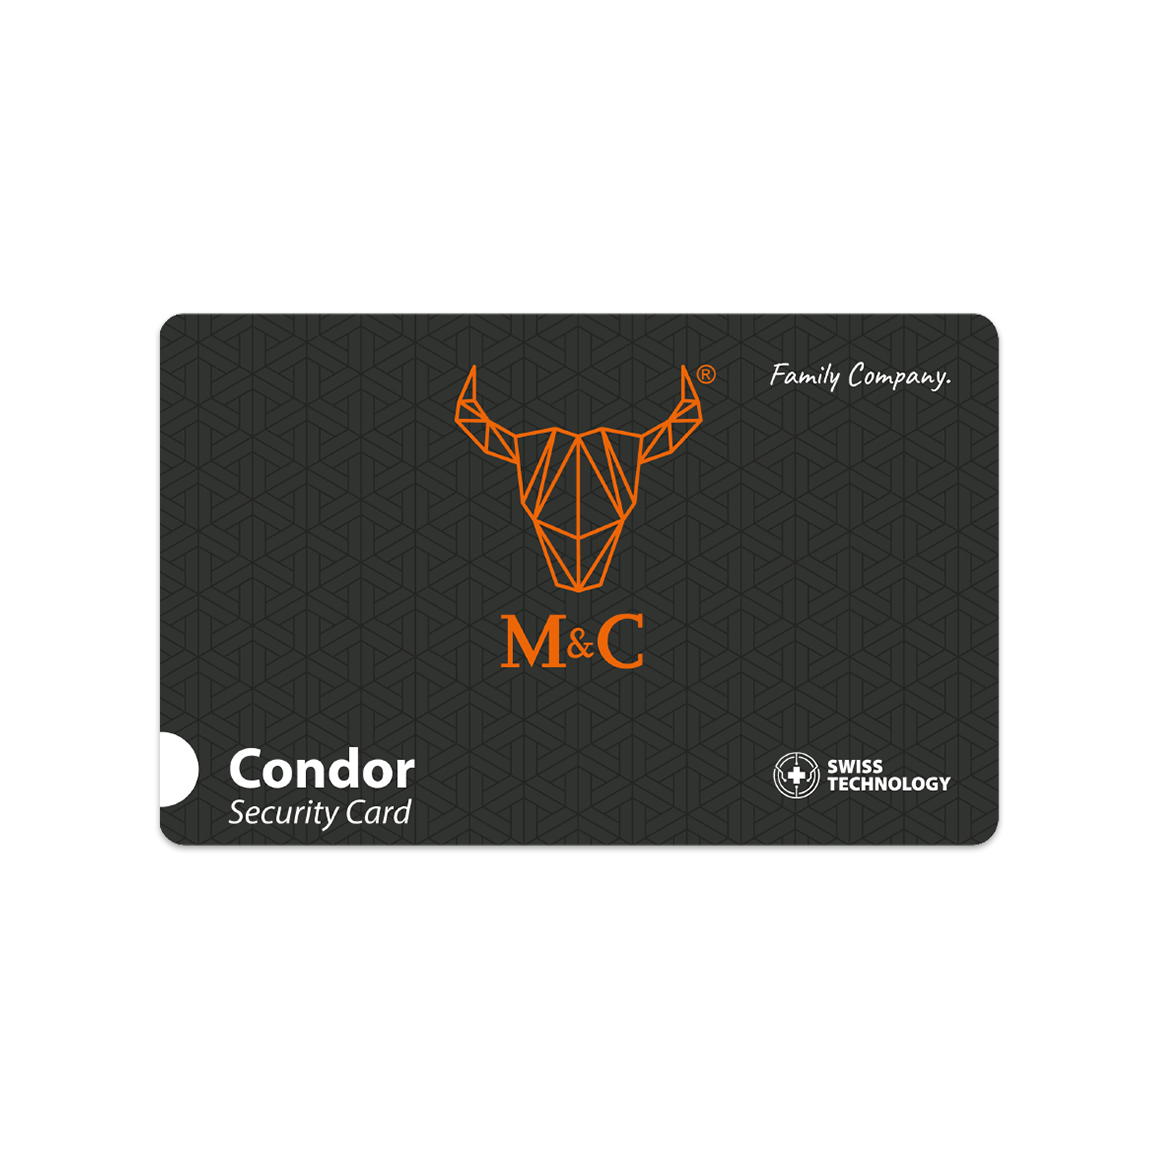 M&C Condor nabestellen